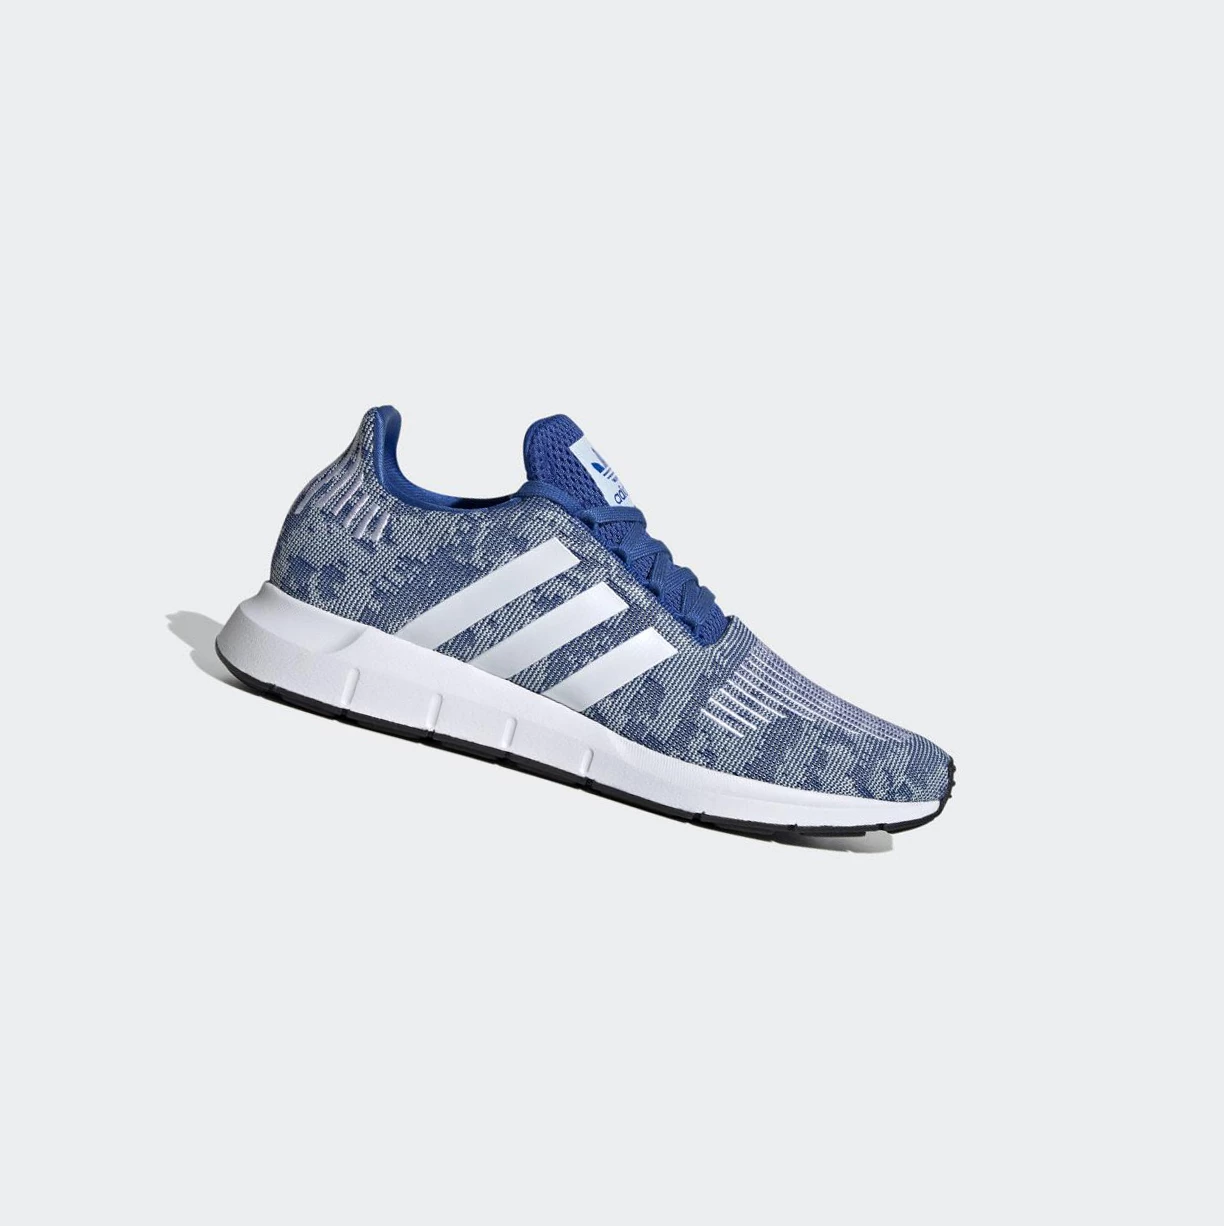 Originálne Topánky Adidas Swift Run Damske Modre | 786SKTJBEAR